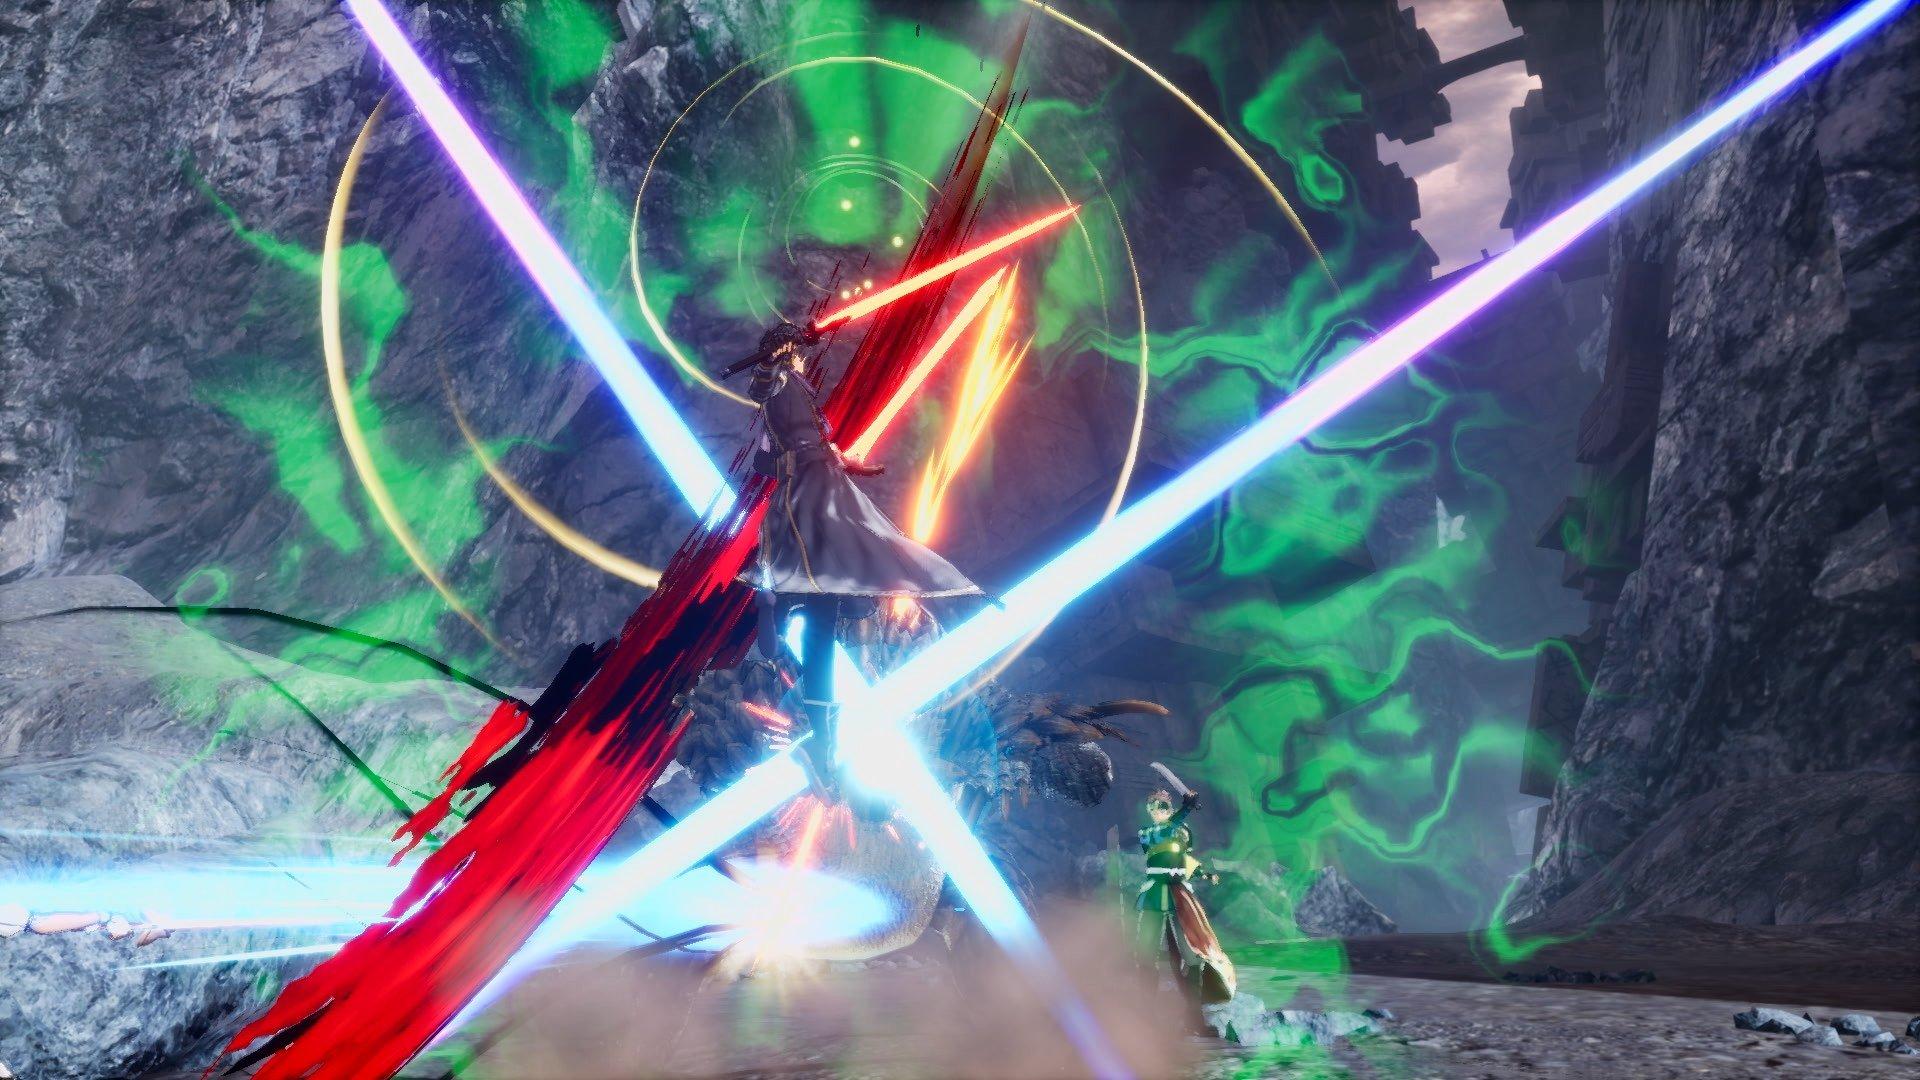 Sword Art Online: Last Recollection [Xbox Series X / Xbox One